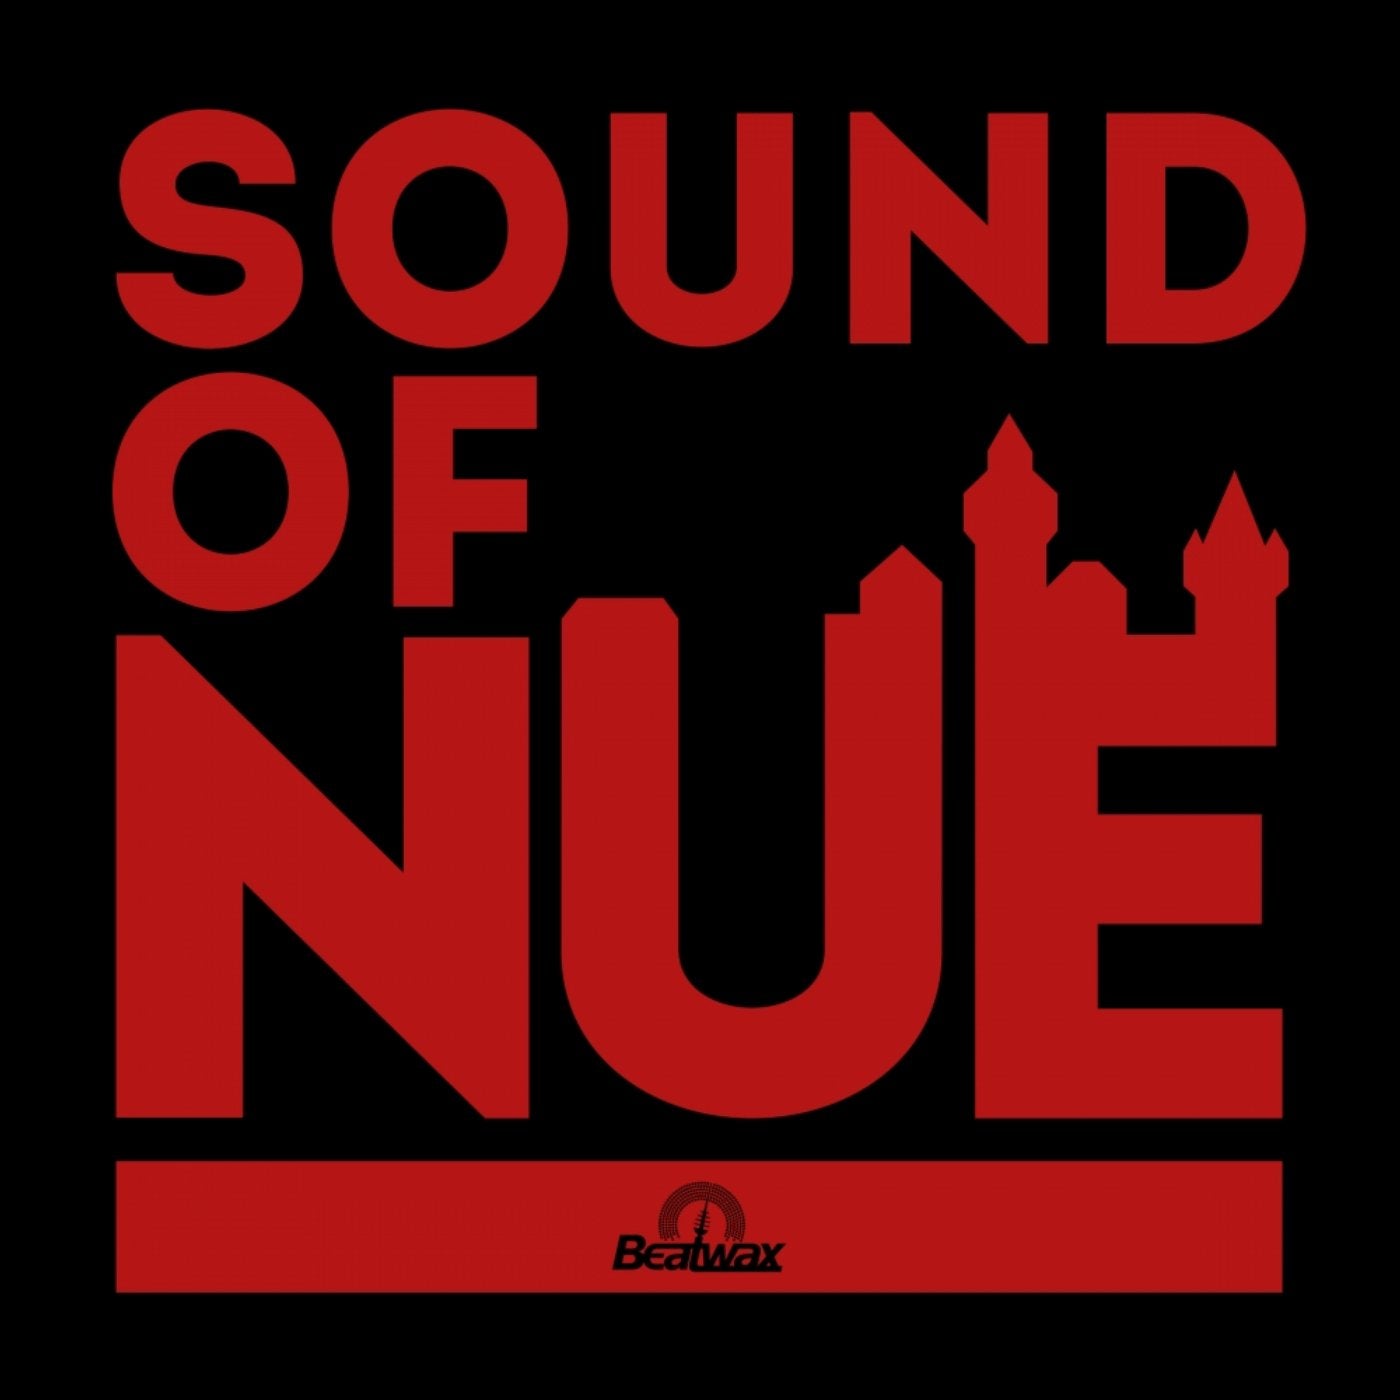 Sound of NUE 3